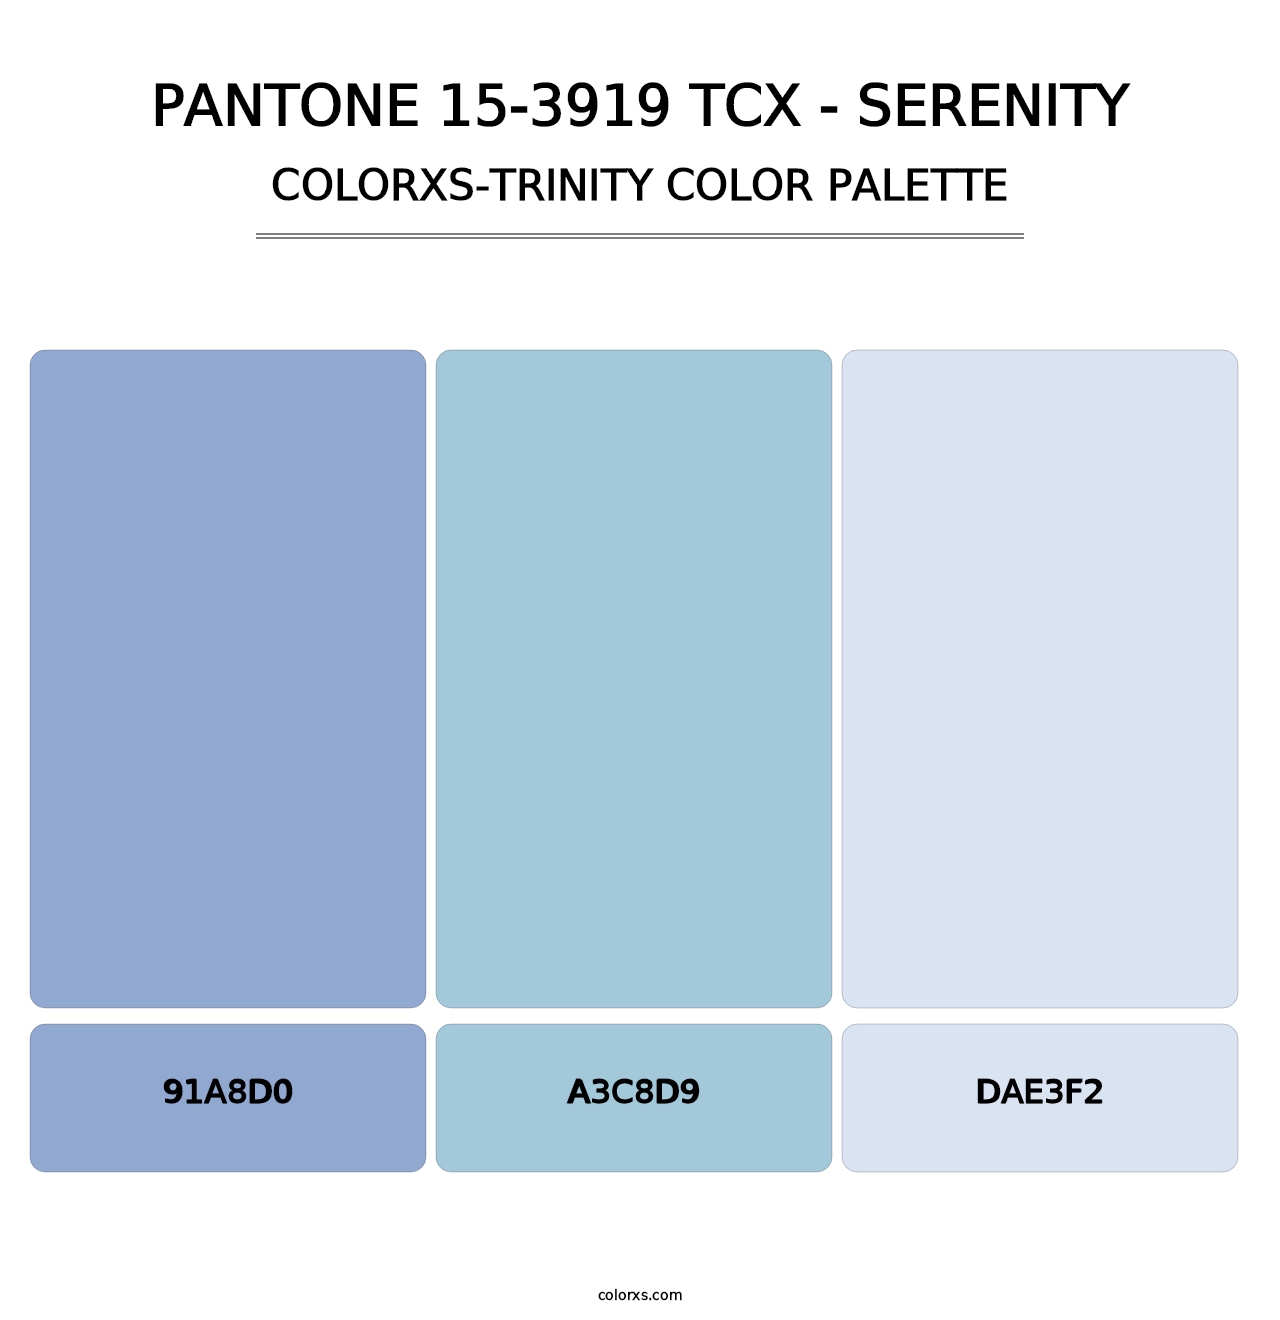 PANTONE 15-3919 TCX - Serenity - Colorxs Trinity Palette